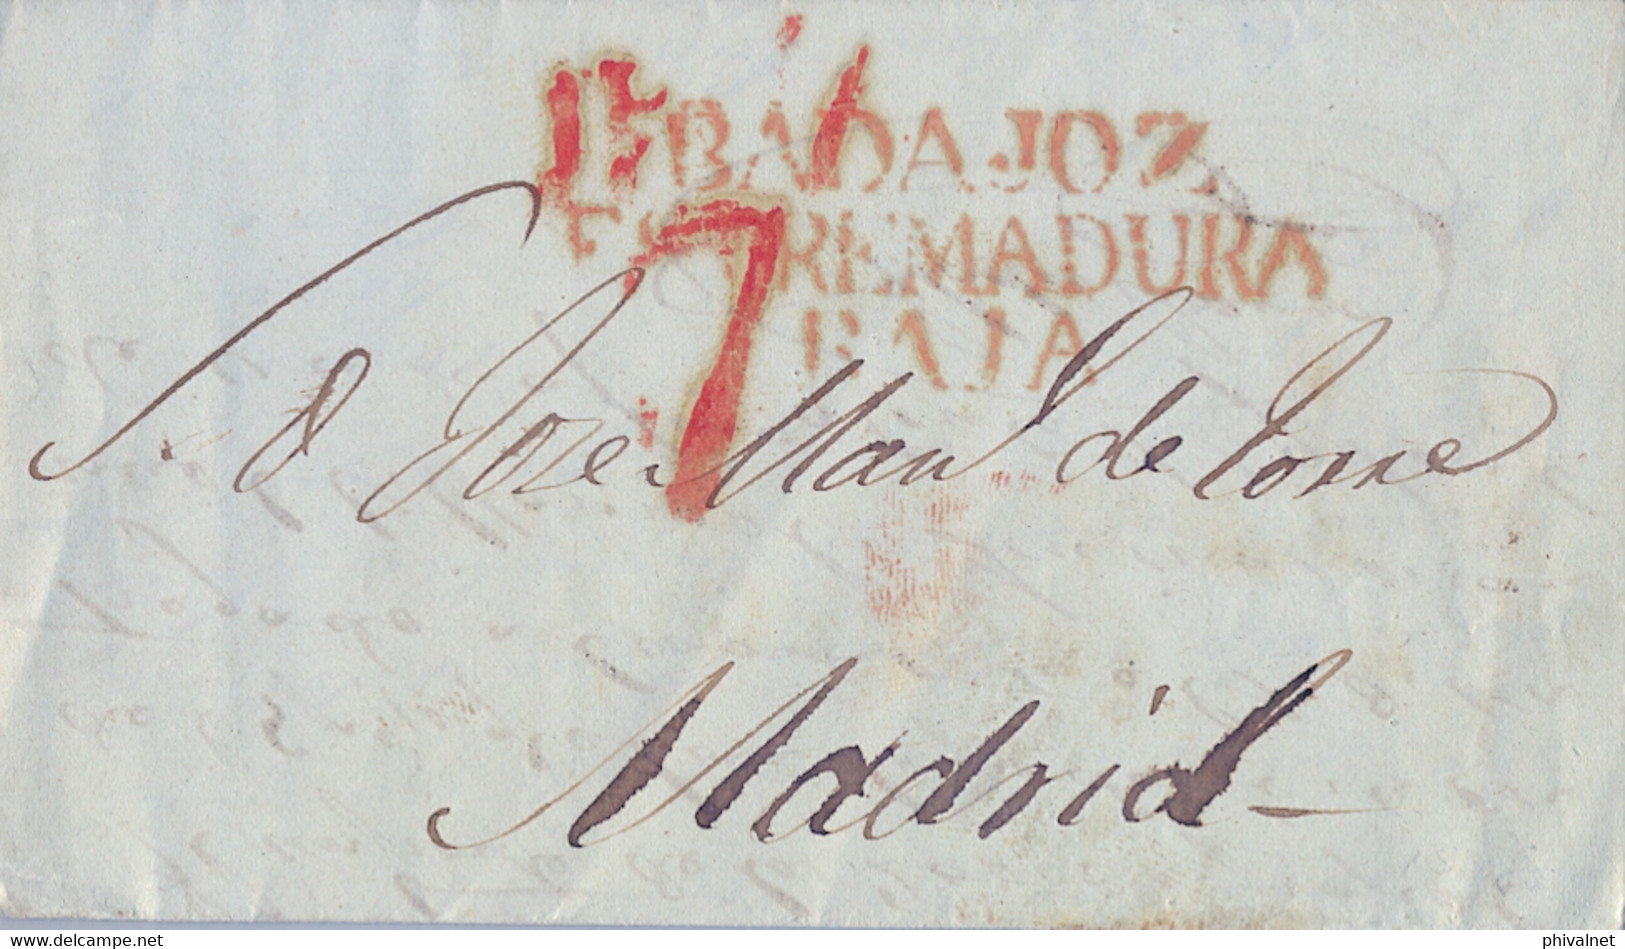 1842 BADAJOZ , CARTA CIRCULADA A MADRID , MARCA PREFILATÉLICA EN ROJO " BADAJOZ / EXTREMADURA BAJA " - ...-1850 Prefilatelia